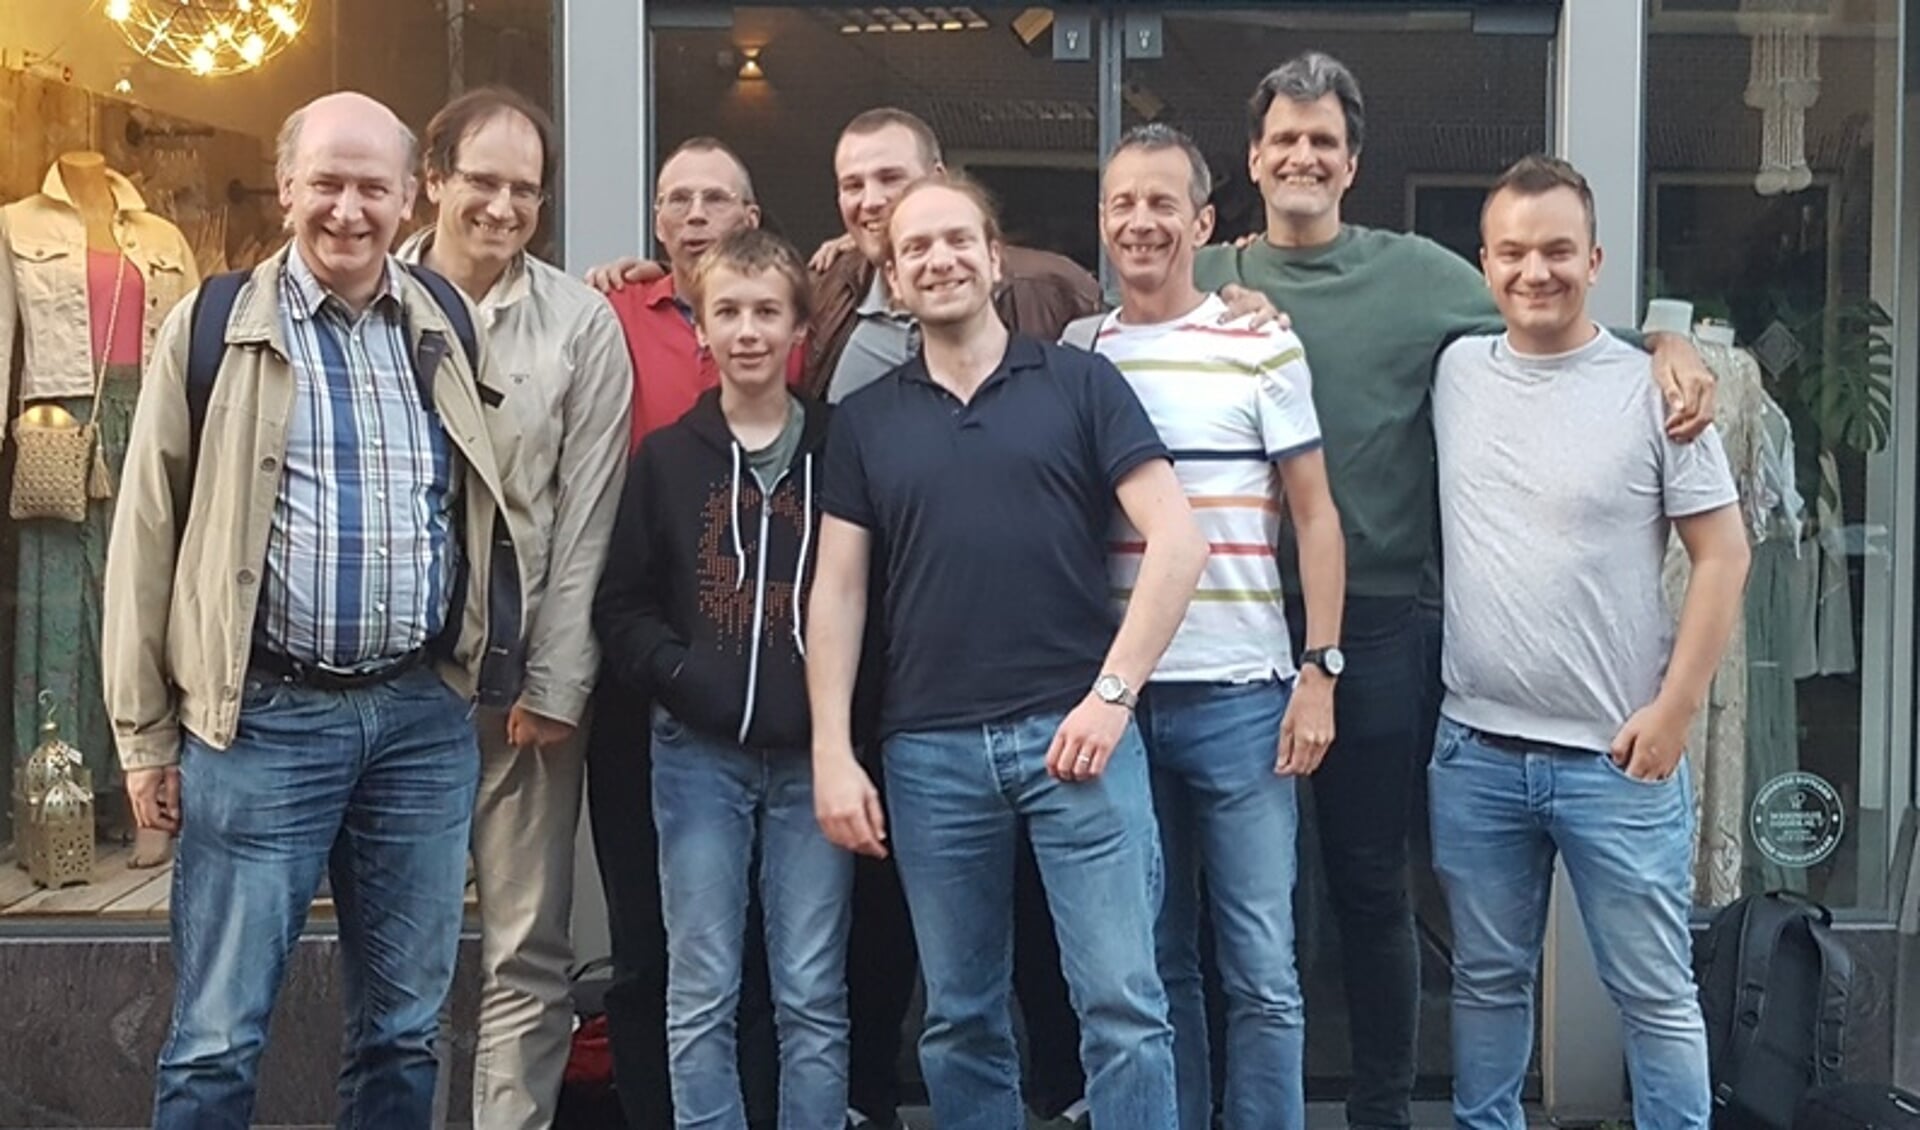 Het winnende team, met vlnr Sybolt, Stan, Piet, Arthur, Robert, Florian, Fitzgerald, Sander, Gijs. Marc ontbreekt op de foto.